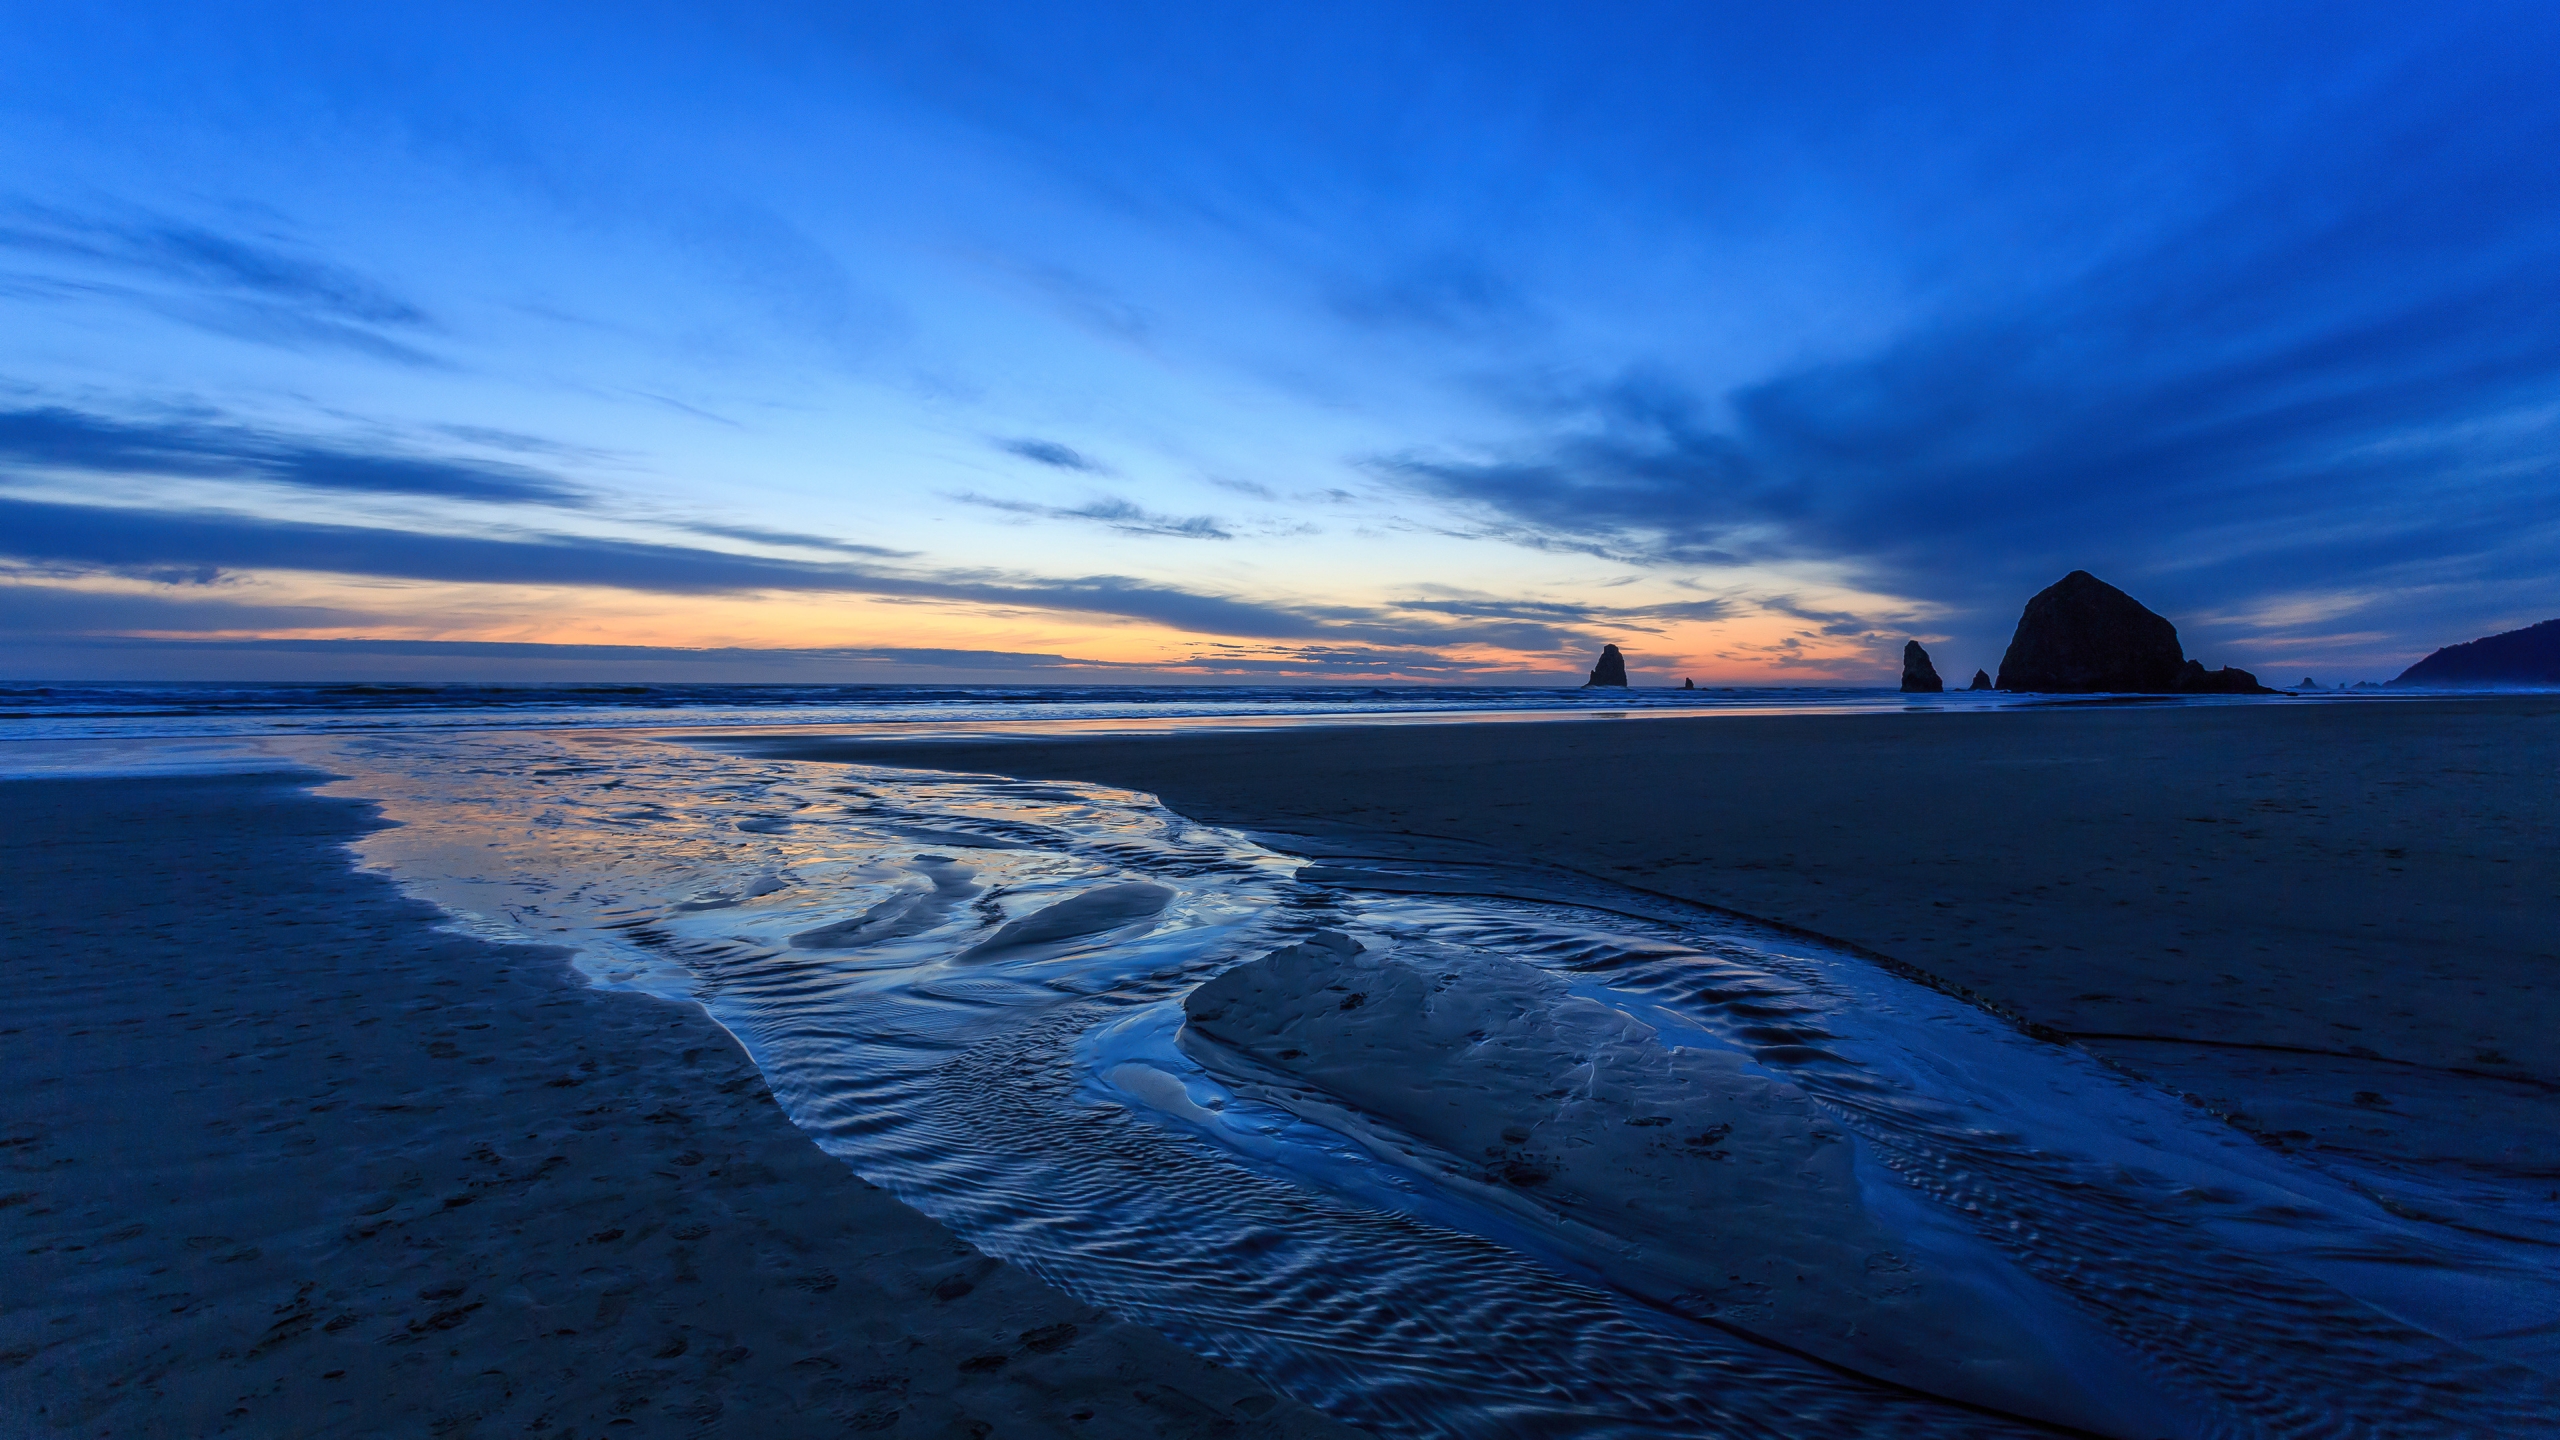 Sunset Oregon Beach for 2560x1440 HDTV resolution